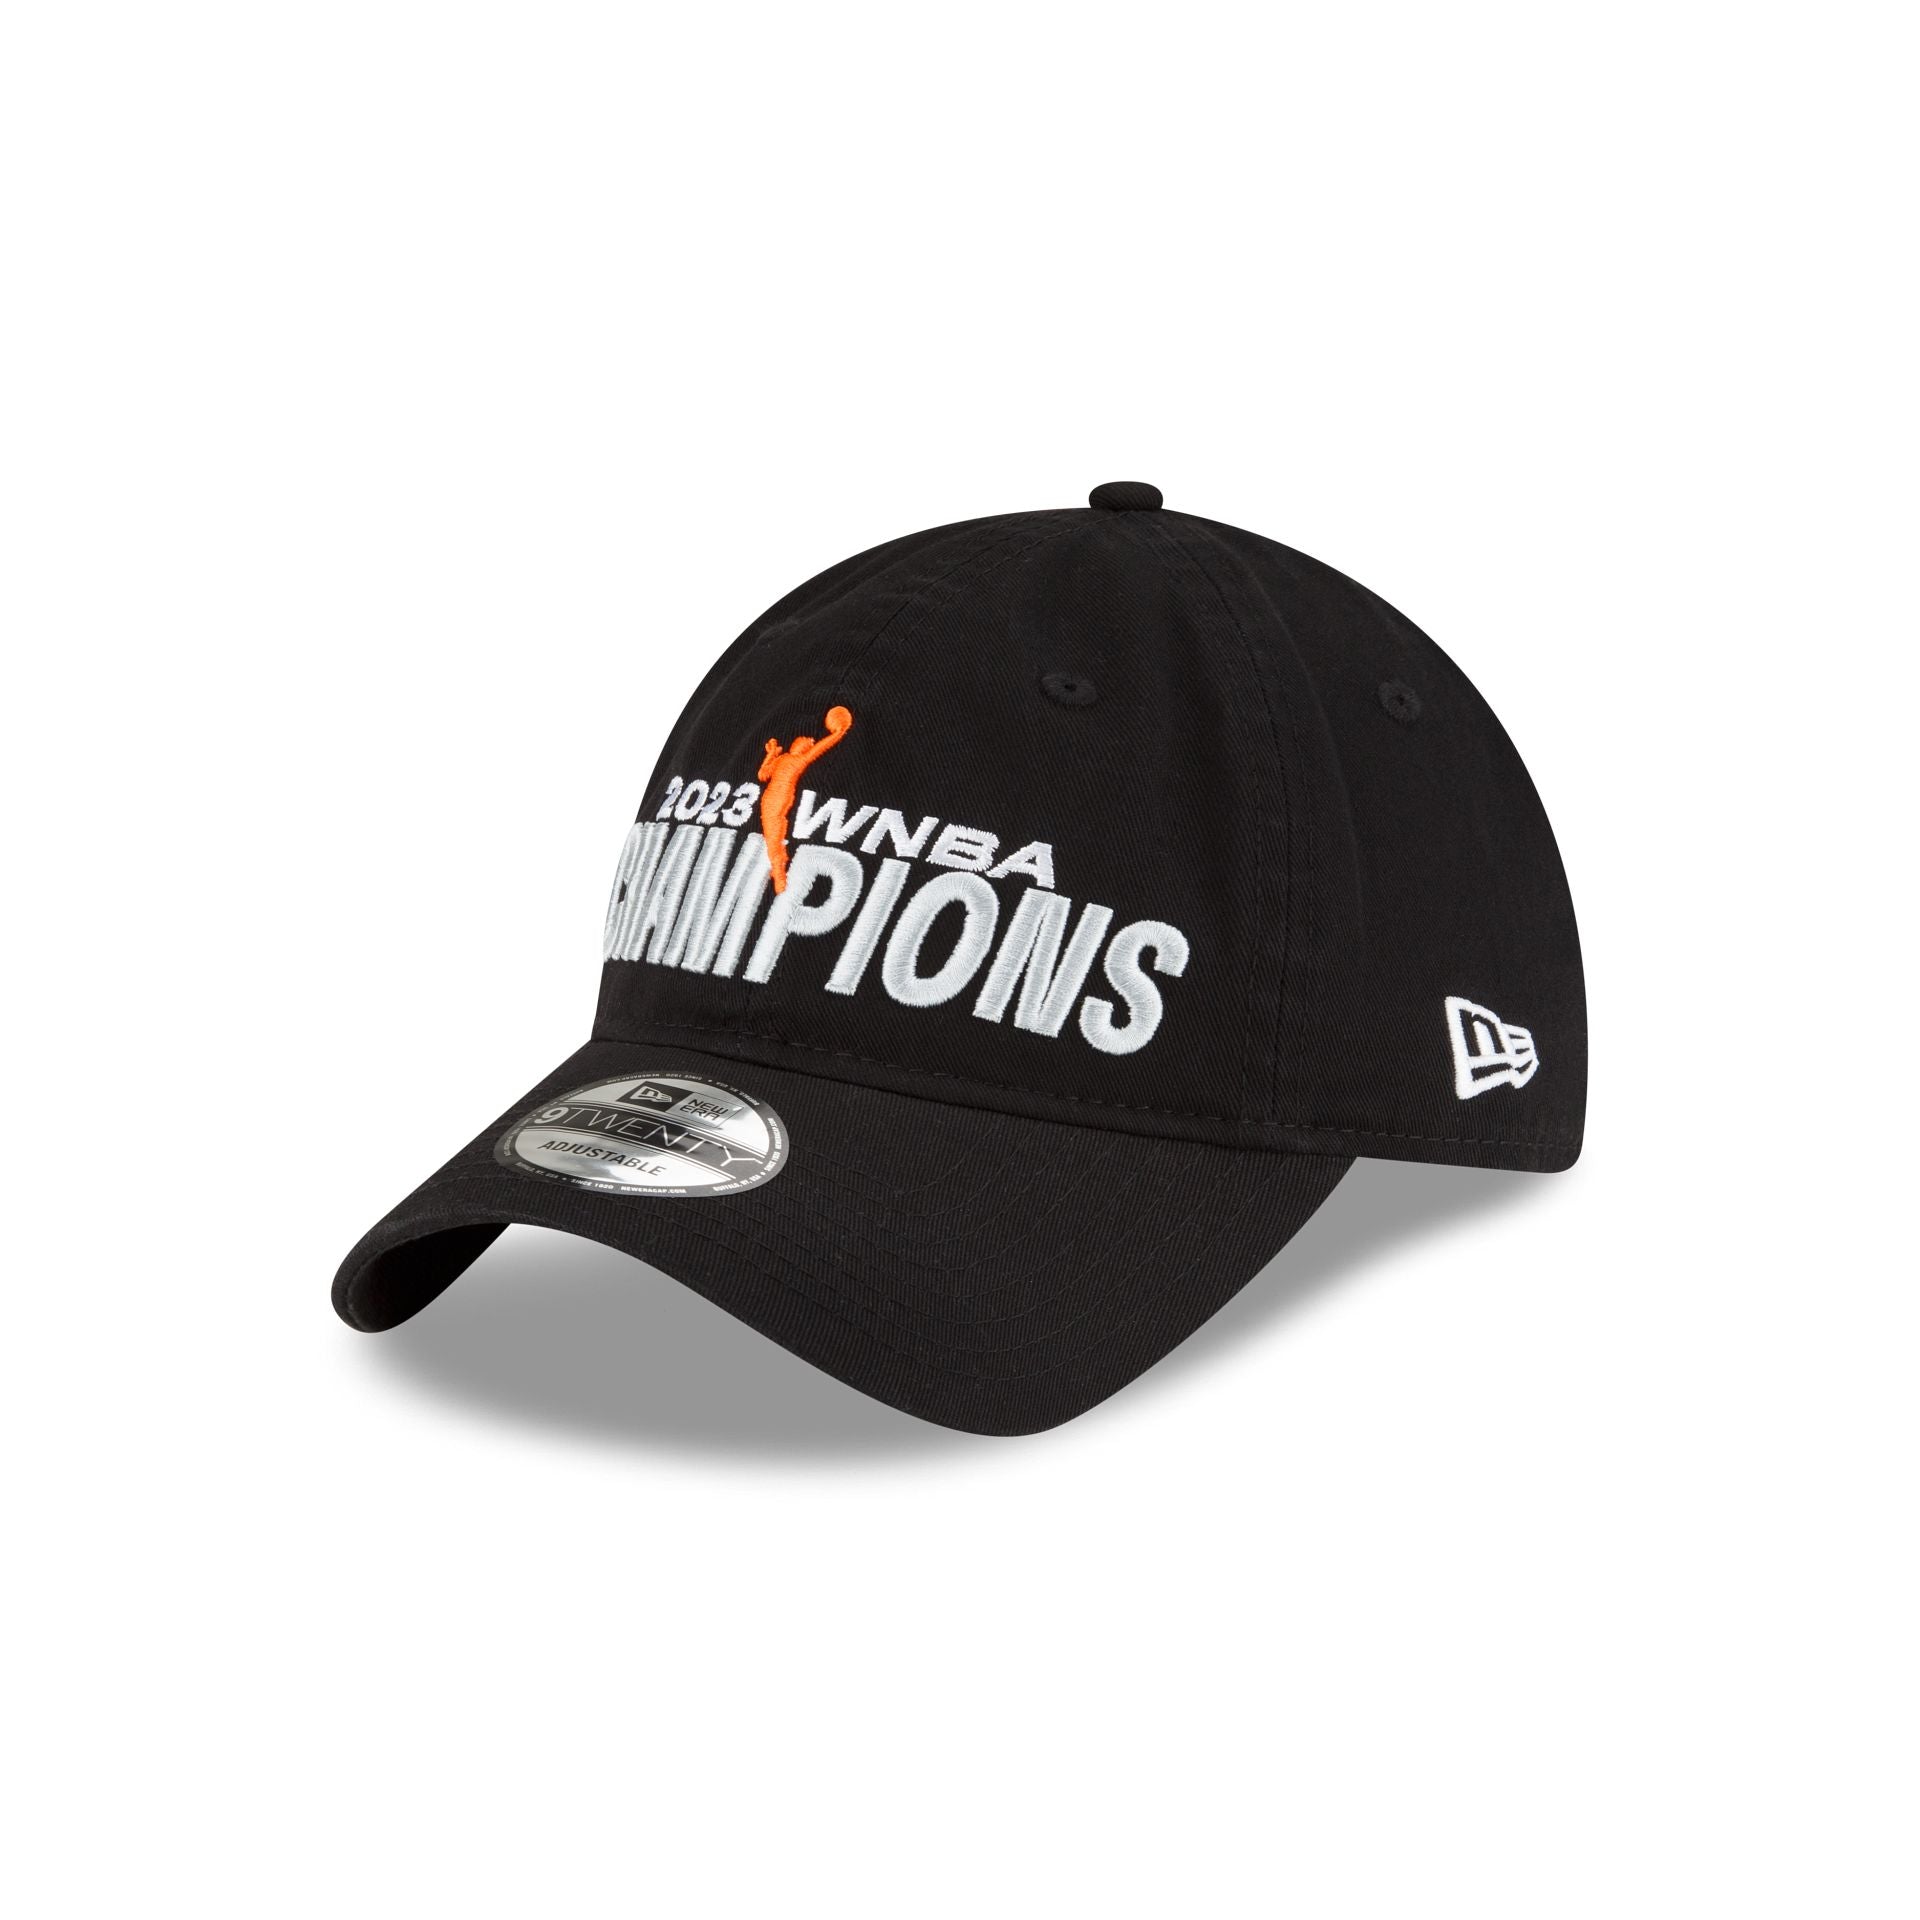 Las Vegas Aces WNBA Champions shirts, hats, hoodies, more: Where